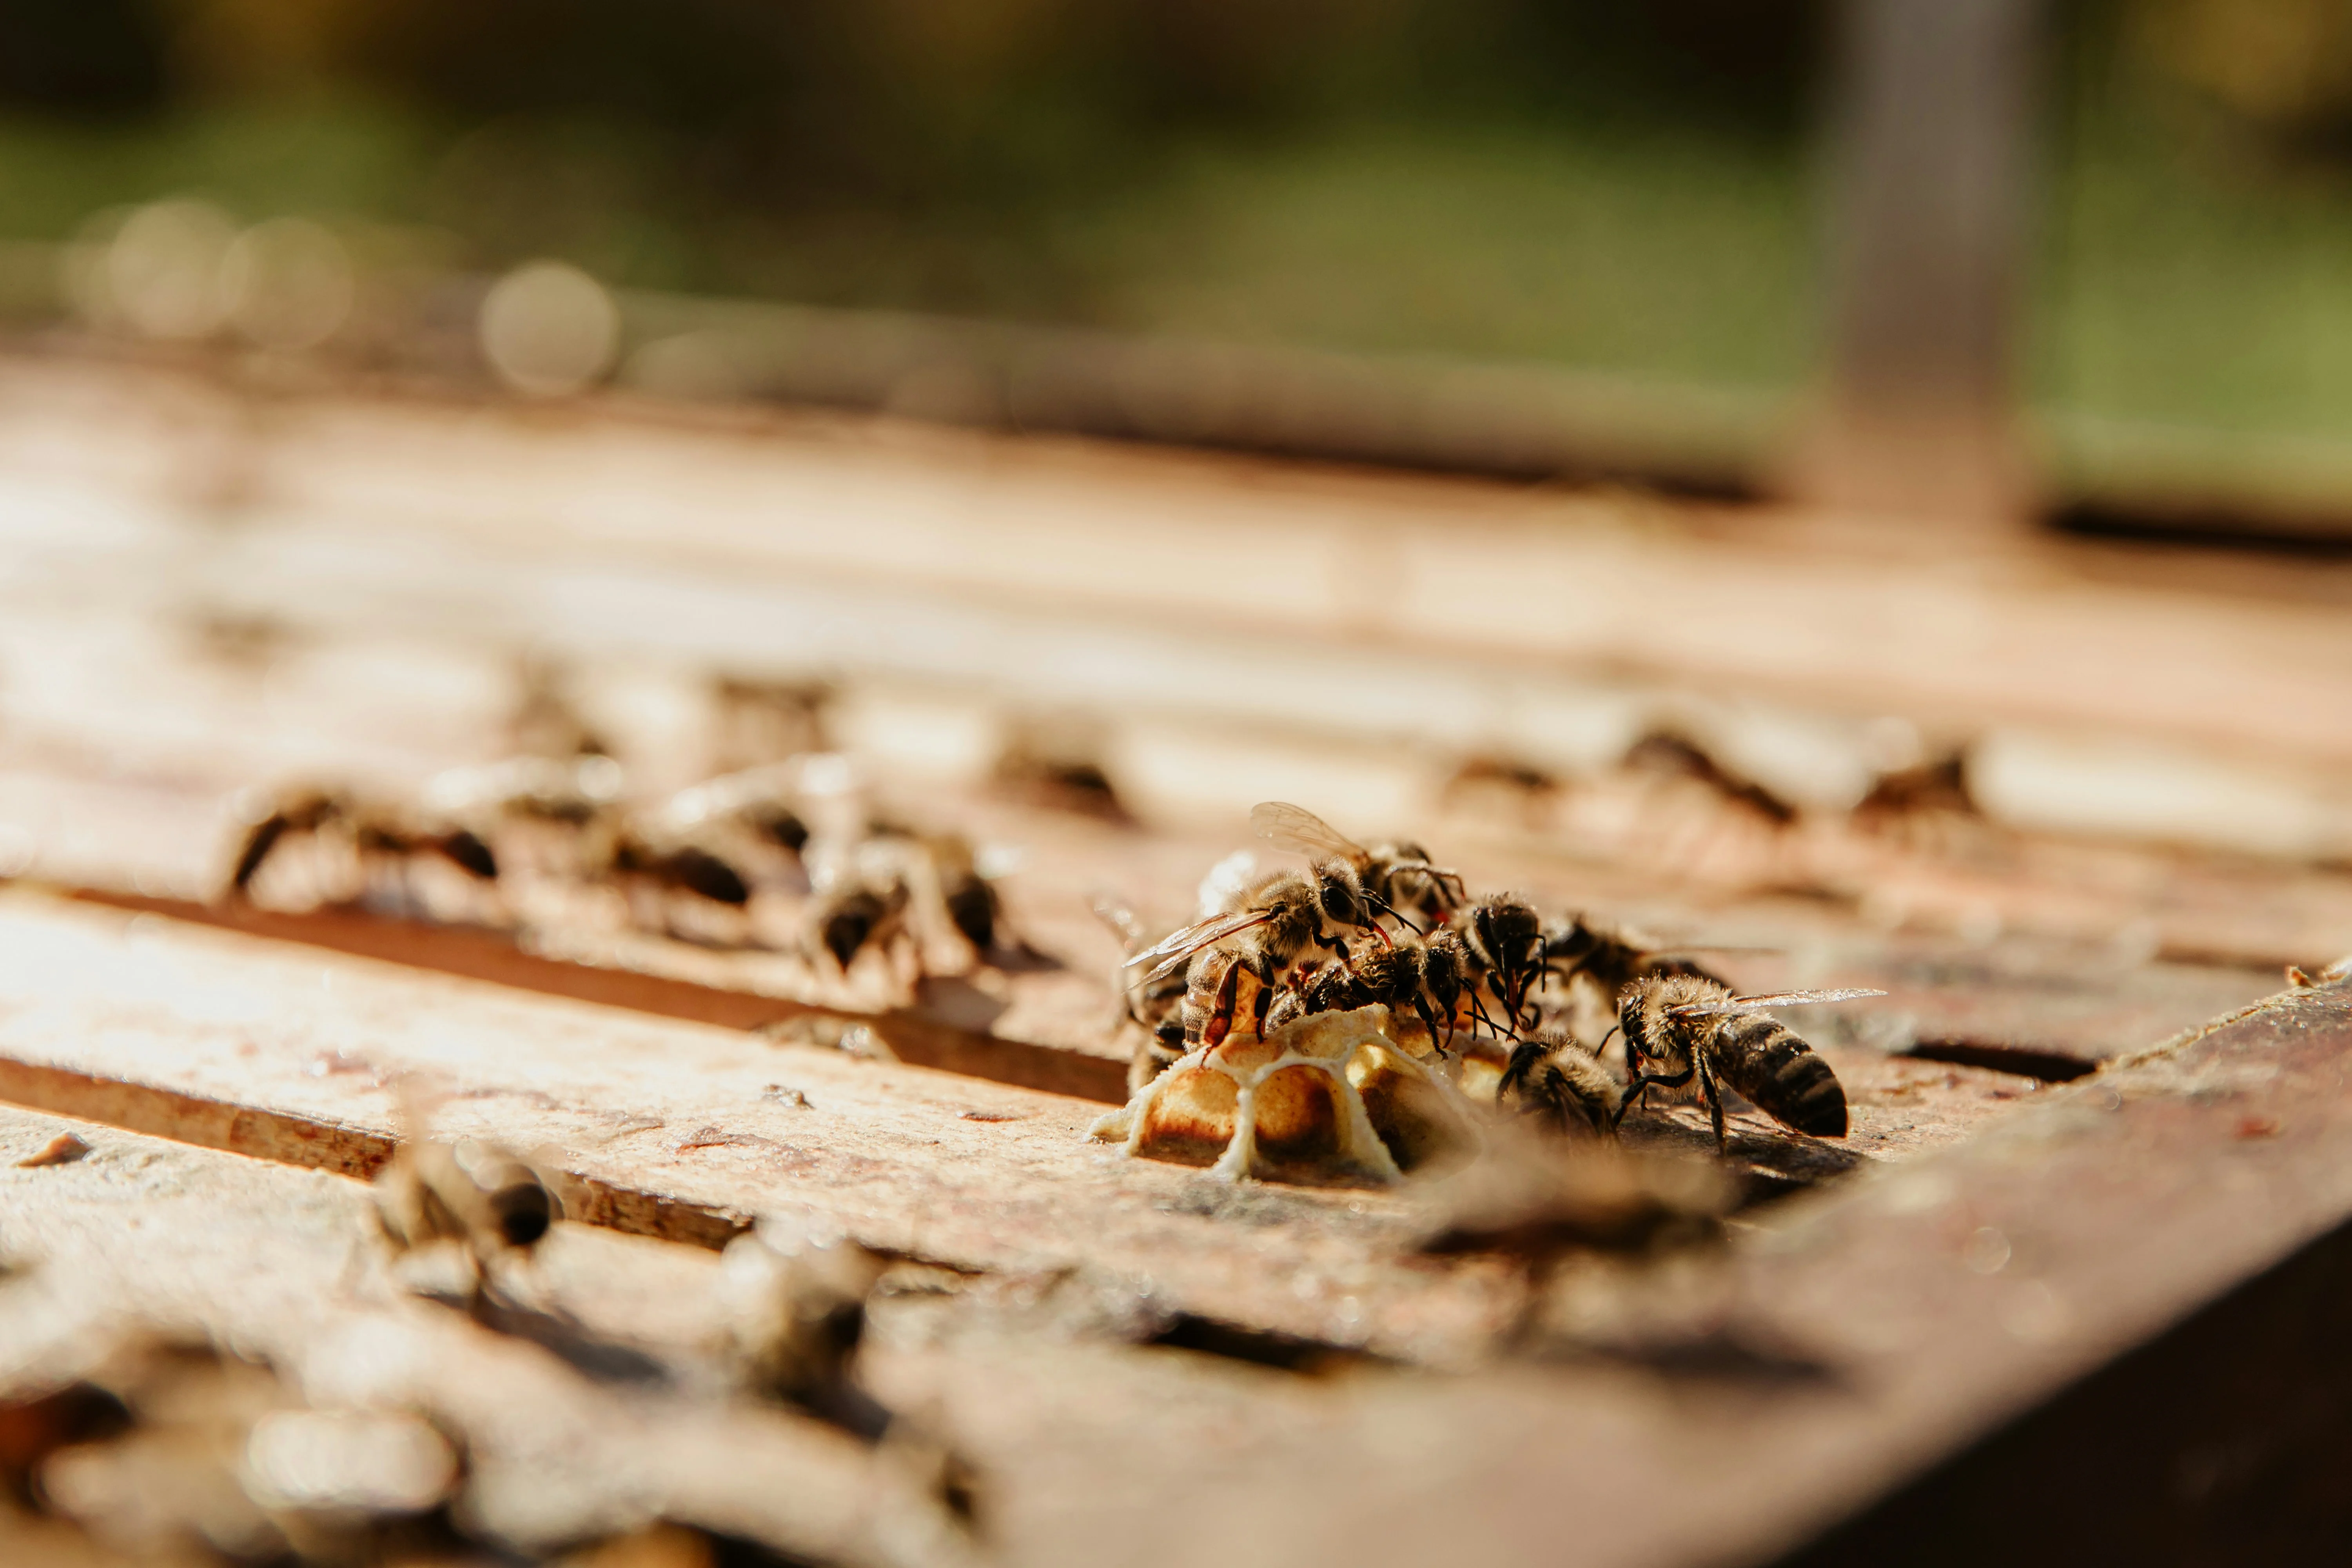 Does Vinegar Kill Termites? - Termites crawling on wood